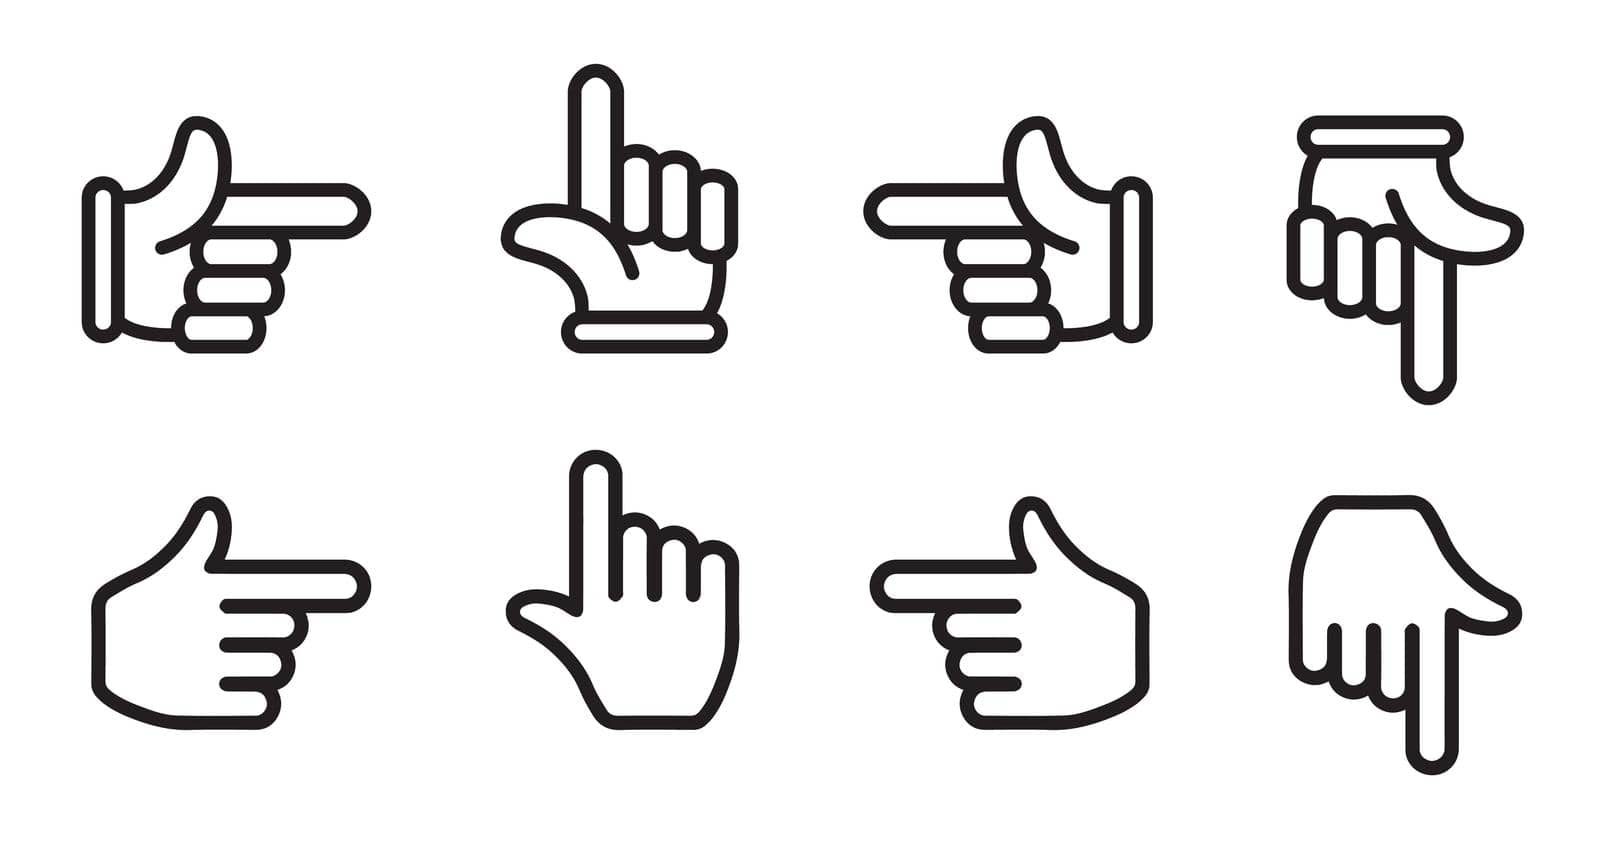 finger pointer / finger arrow icon set by barks